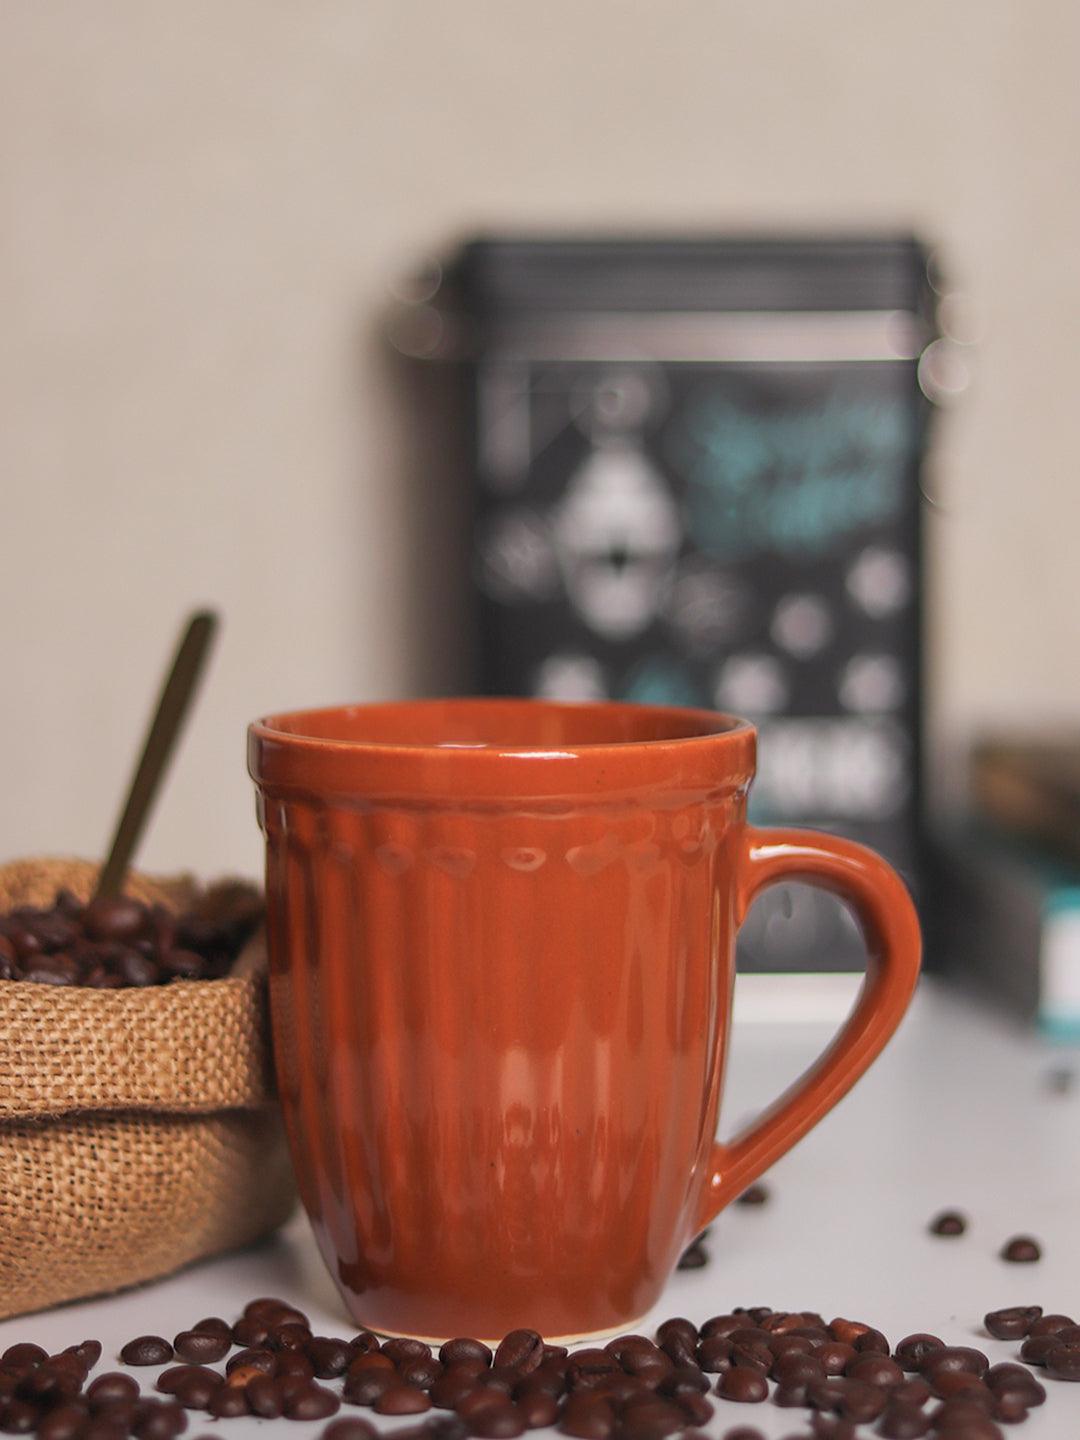 VON CASA Ceramic Coffee & Tea Mug - 300 Ml, Brown